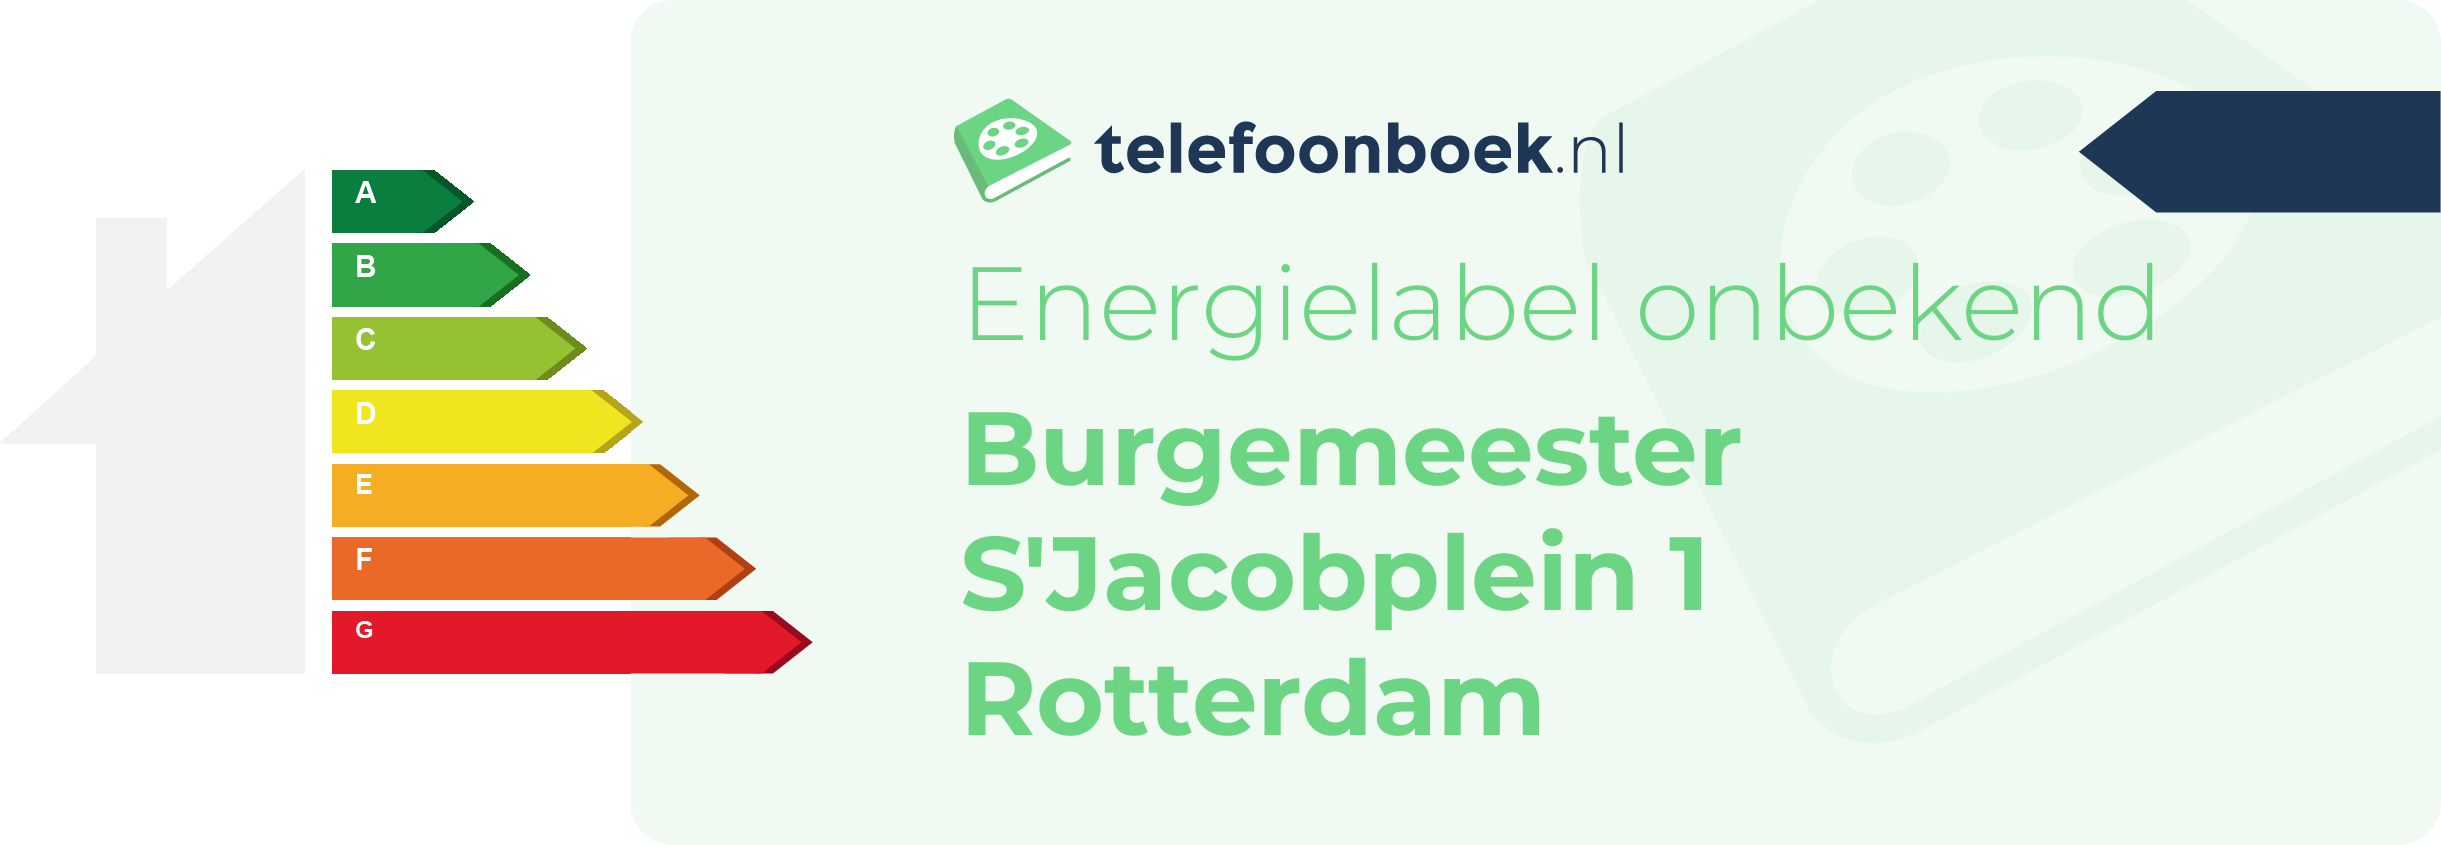 Energielabel Burgemeester S'Jacobplein 1 Rotterdam